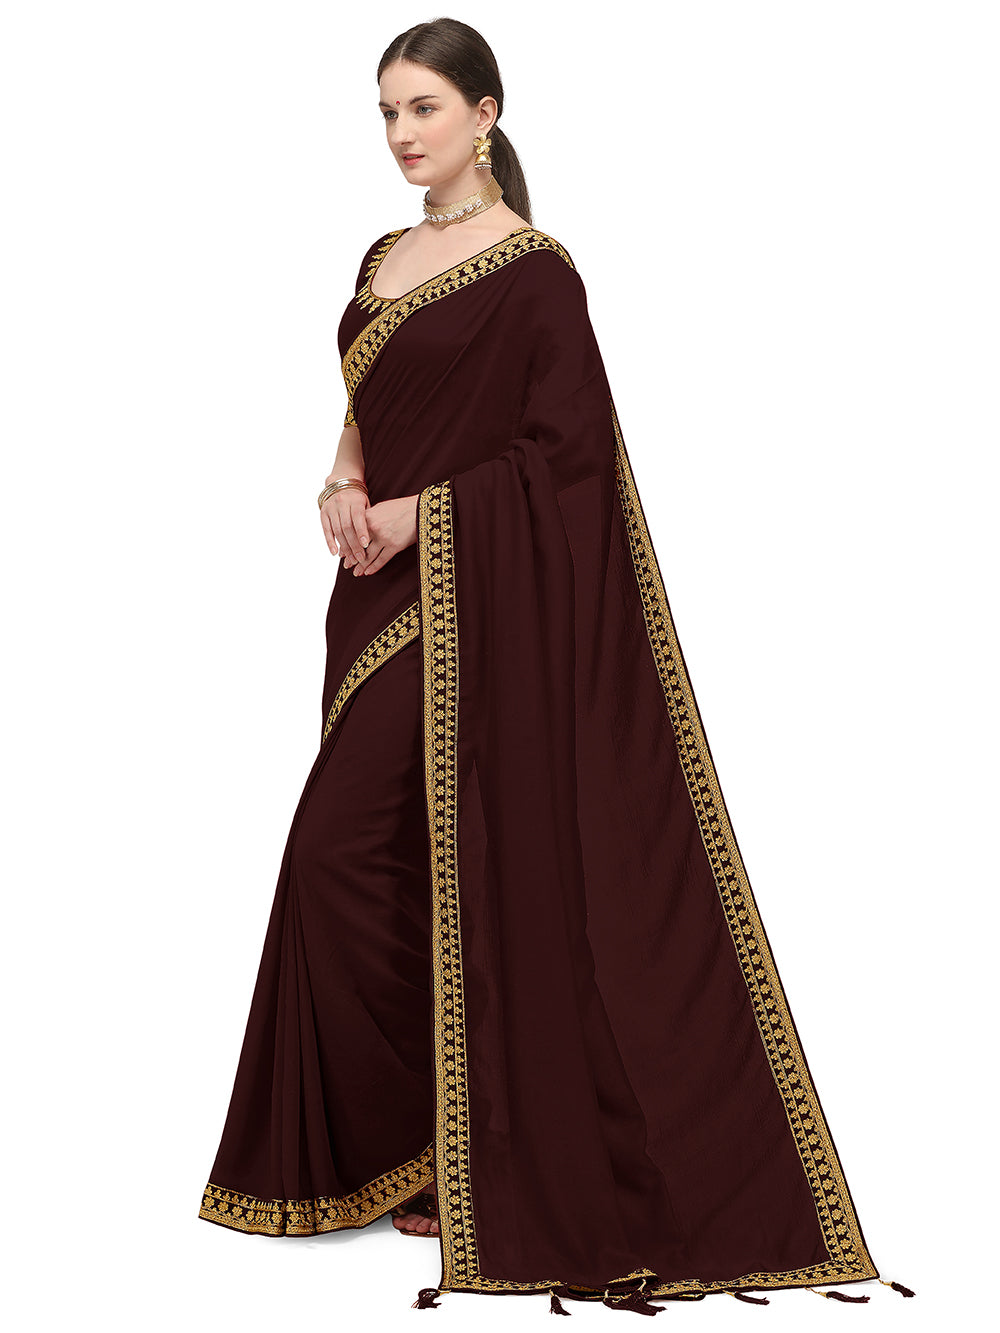 Women's Ahir Embroidery Work Border Wedding Wear Dupion Silk Saree With Blouse Piece (Coffee Brown) - NIMIDHYA